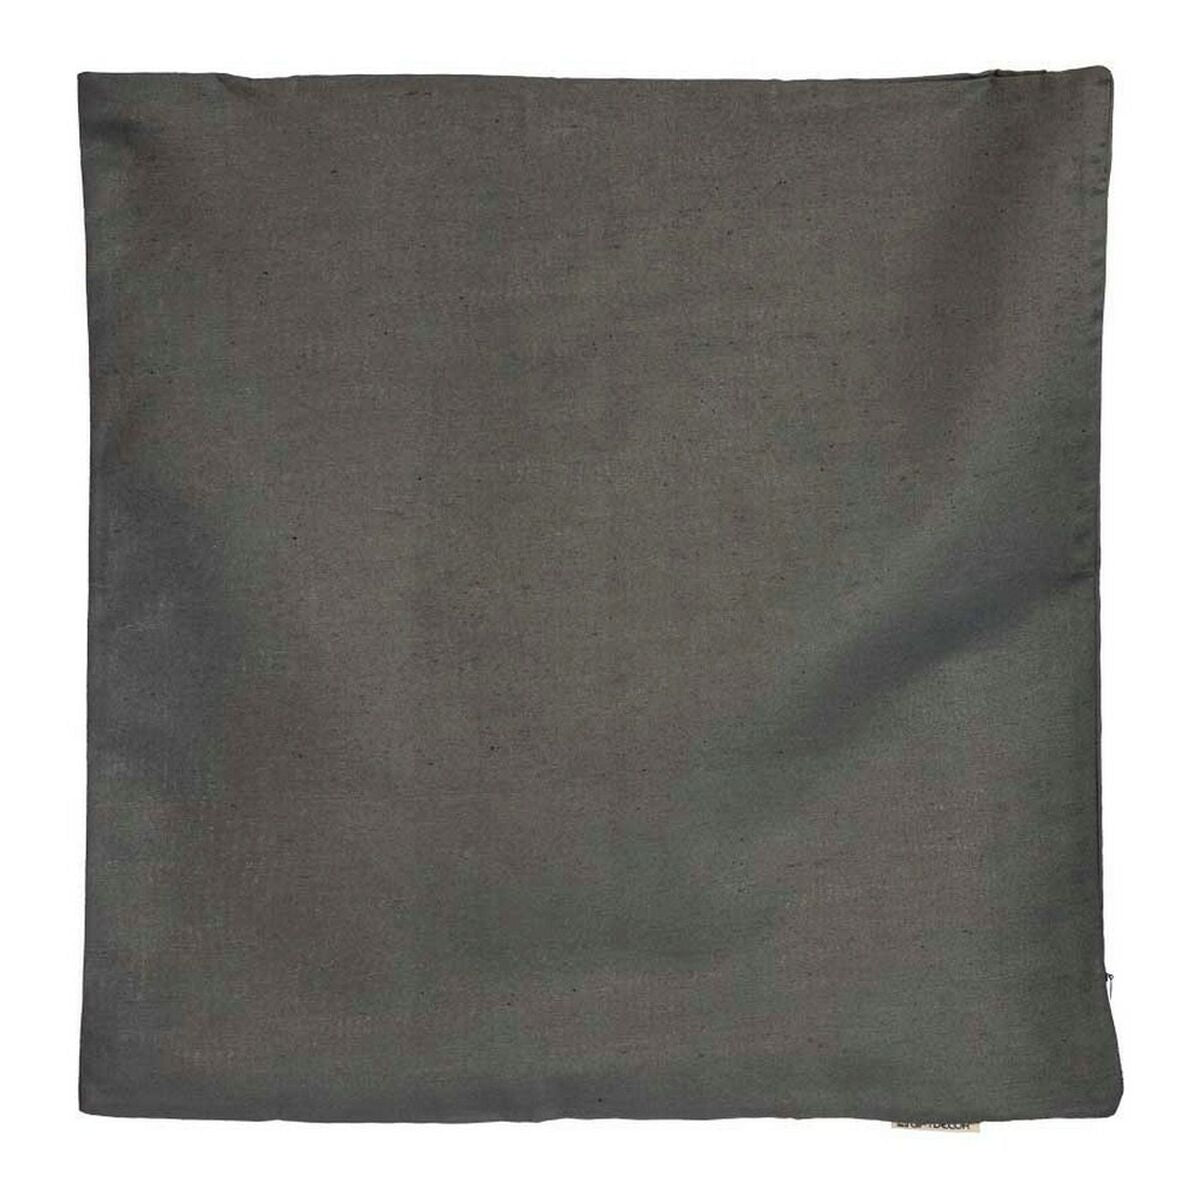 Cushion cover Anthracite 45 x 0,5 x 45 cm 60 x 0,5 x 60 cm